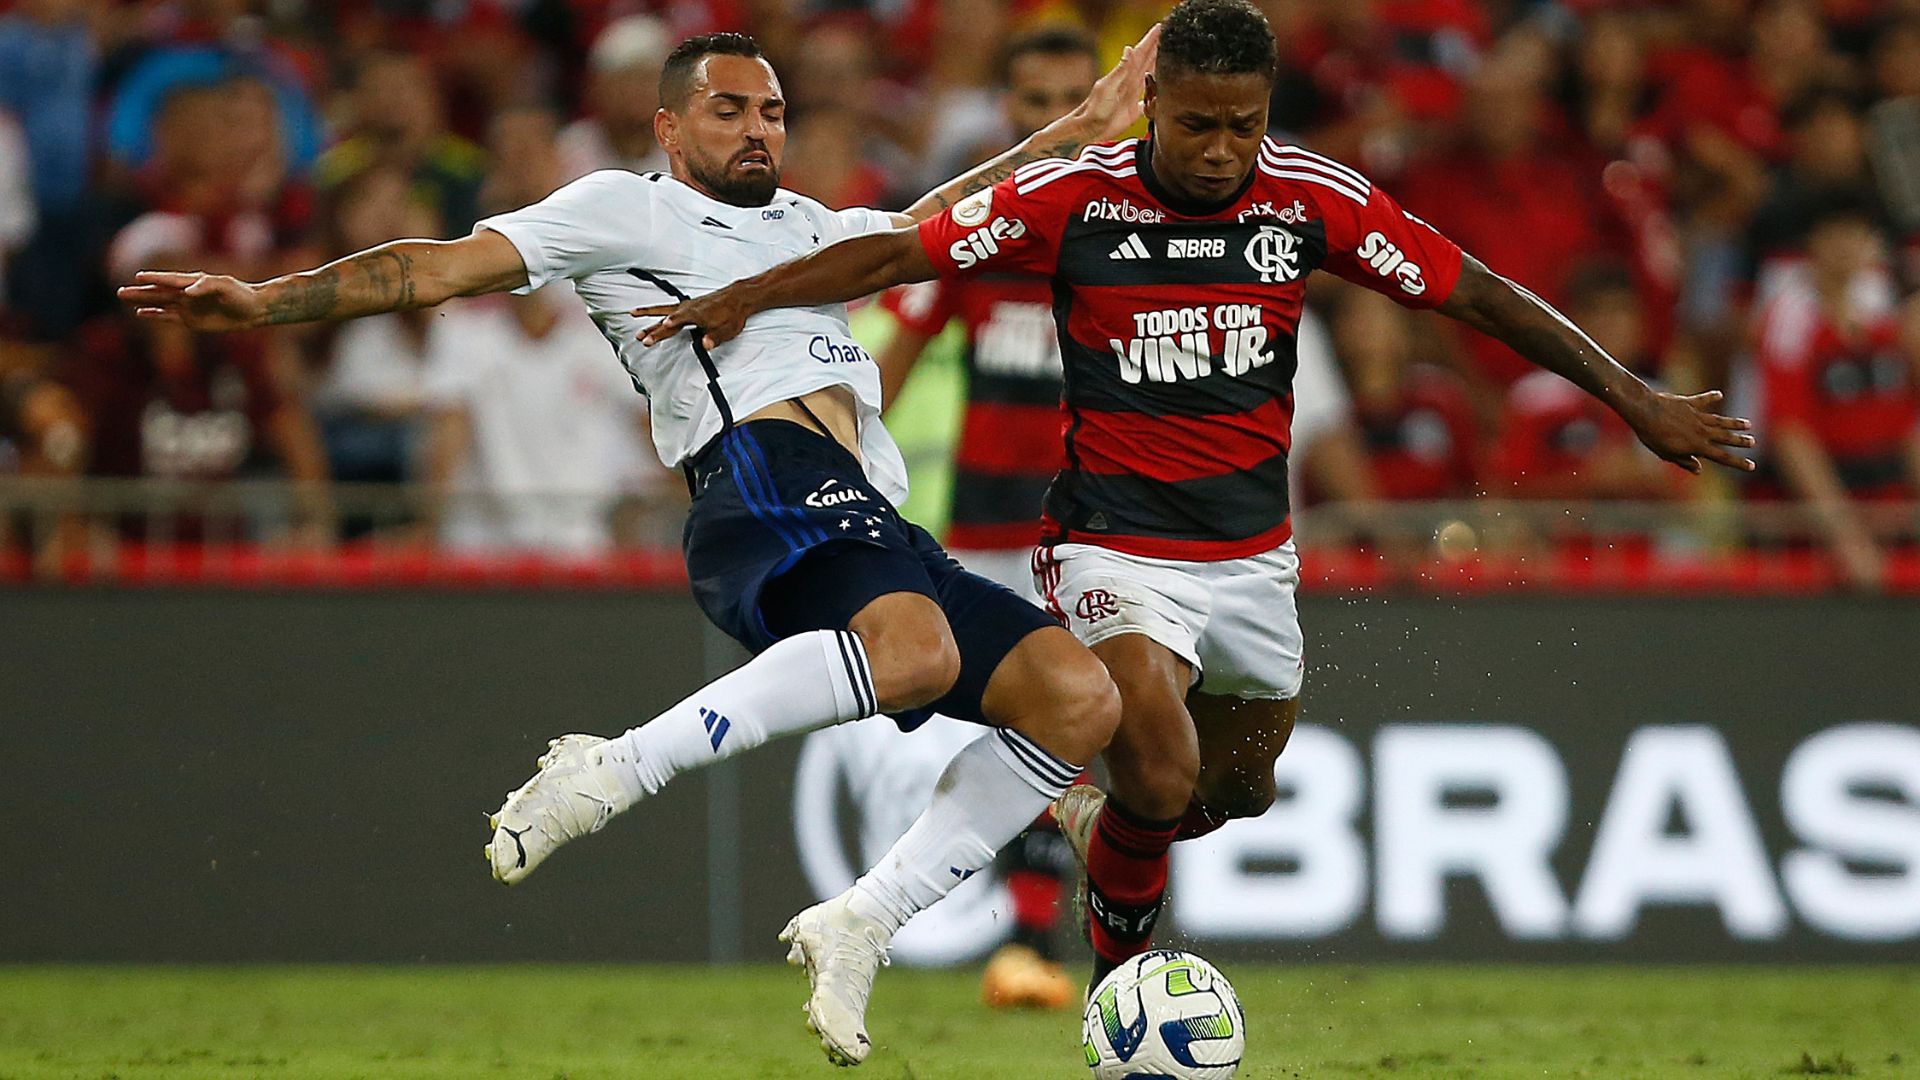 Matheus França in action for Flamengo